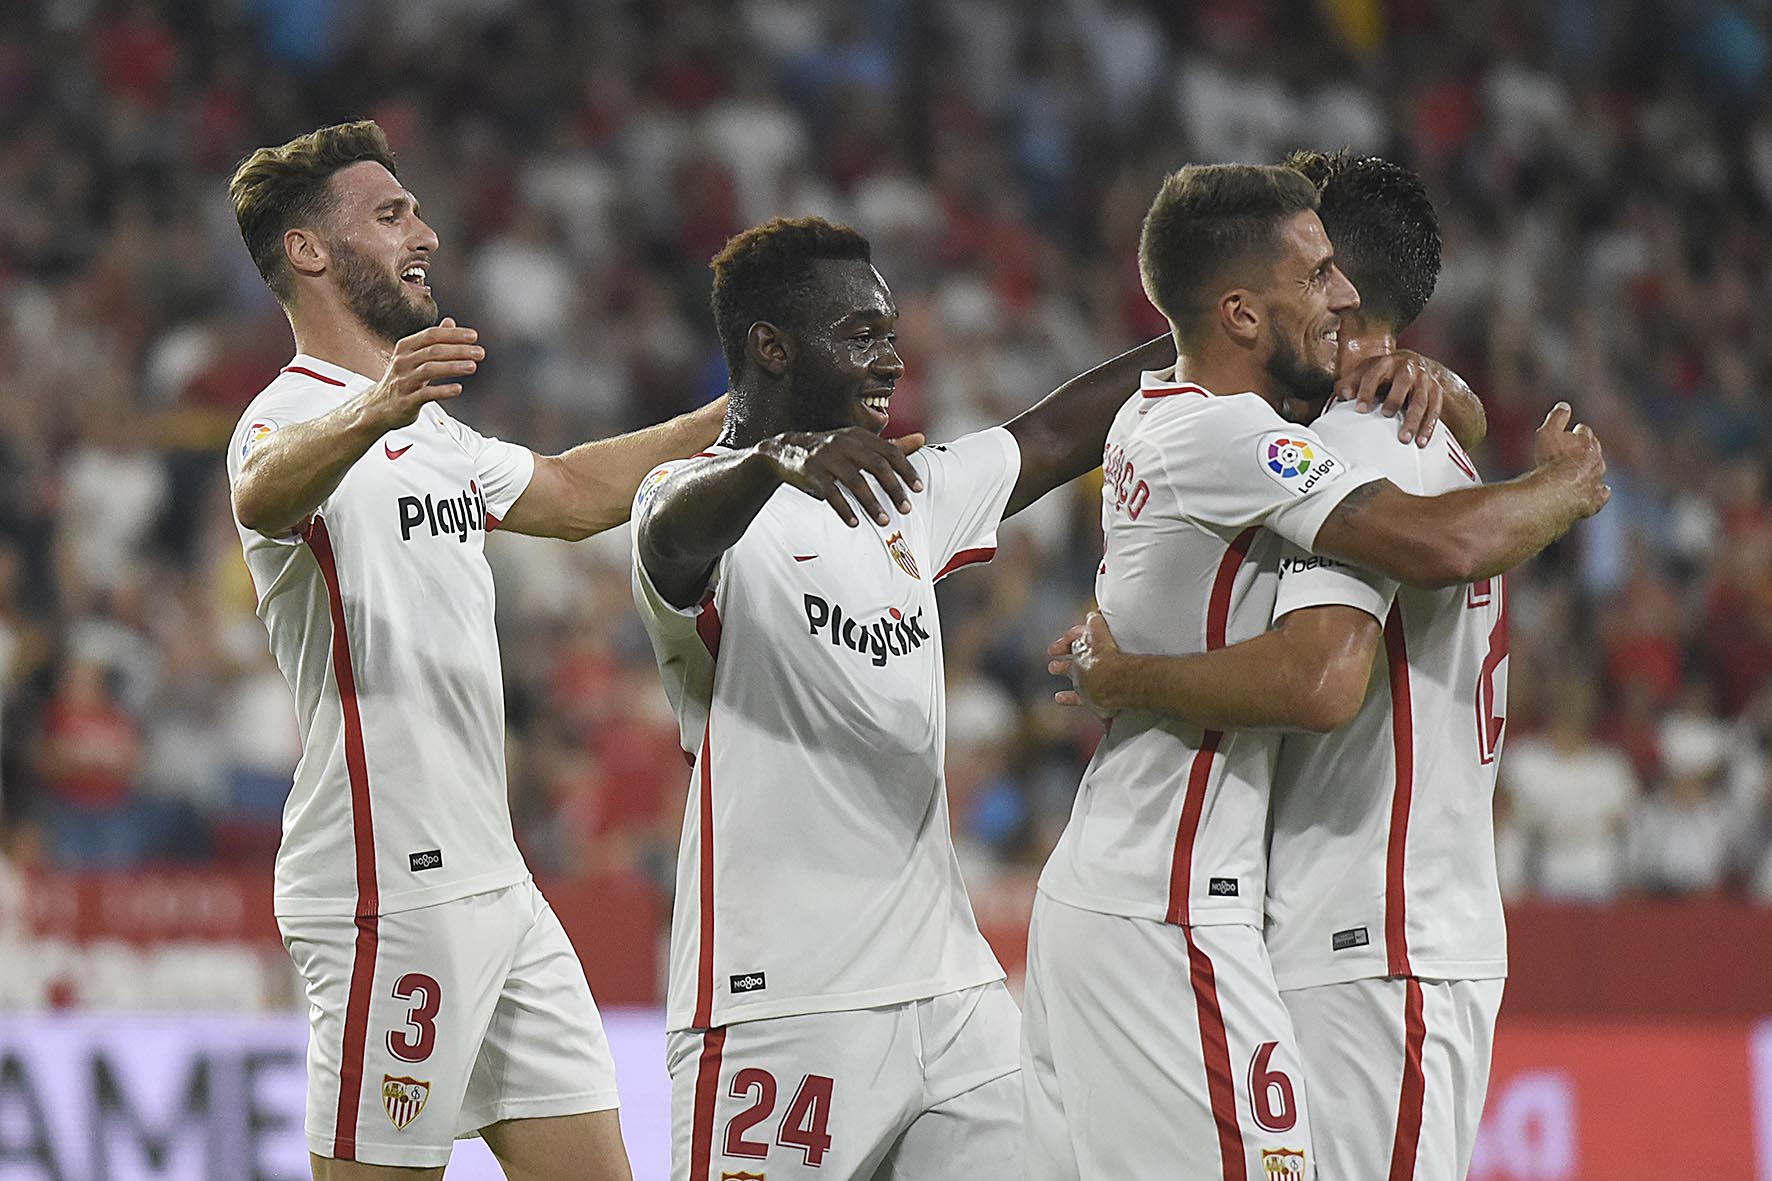 Carriço celebrates a goal with his teammates